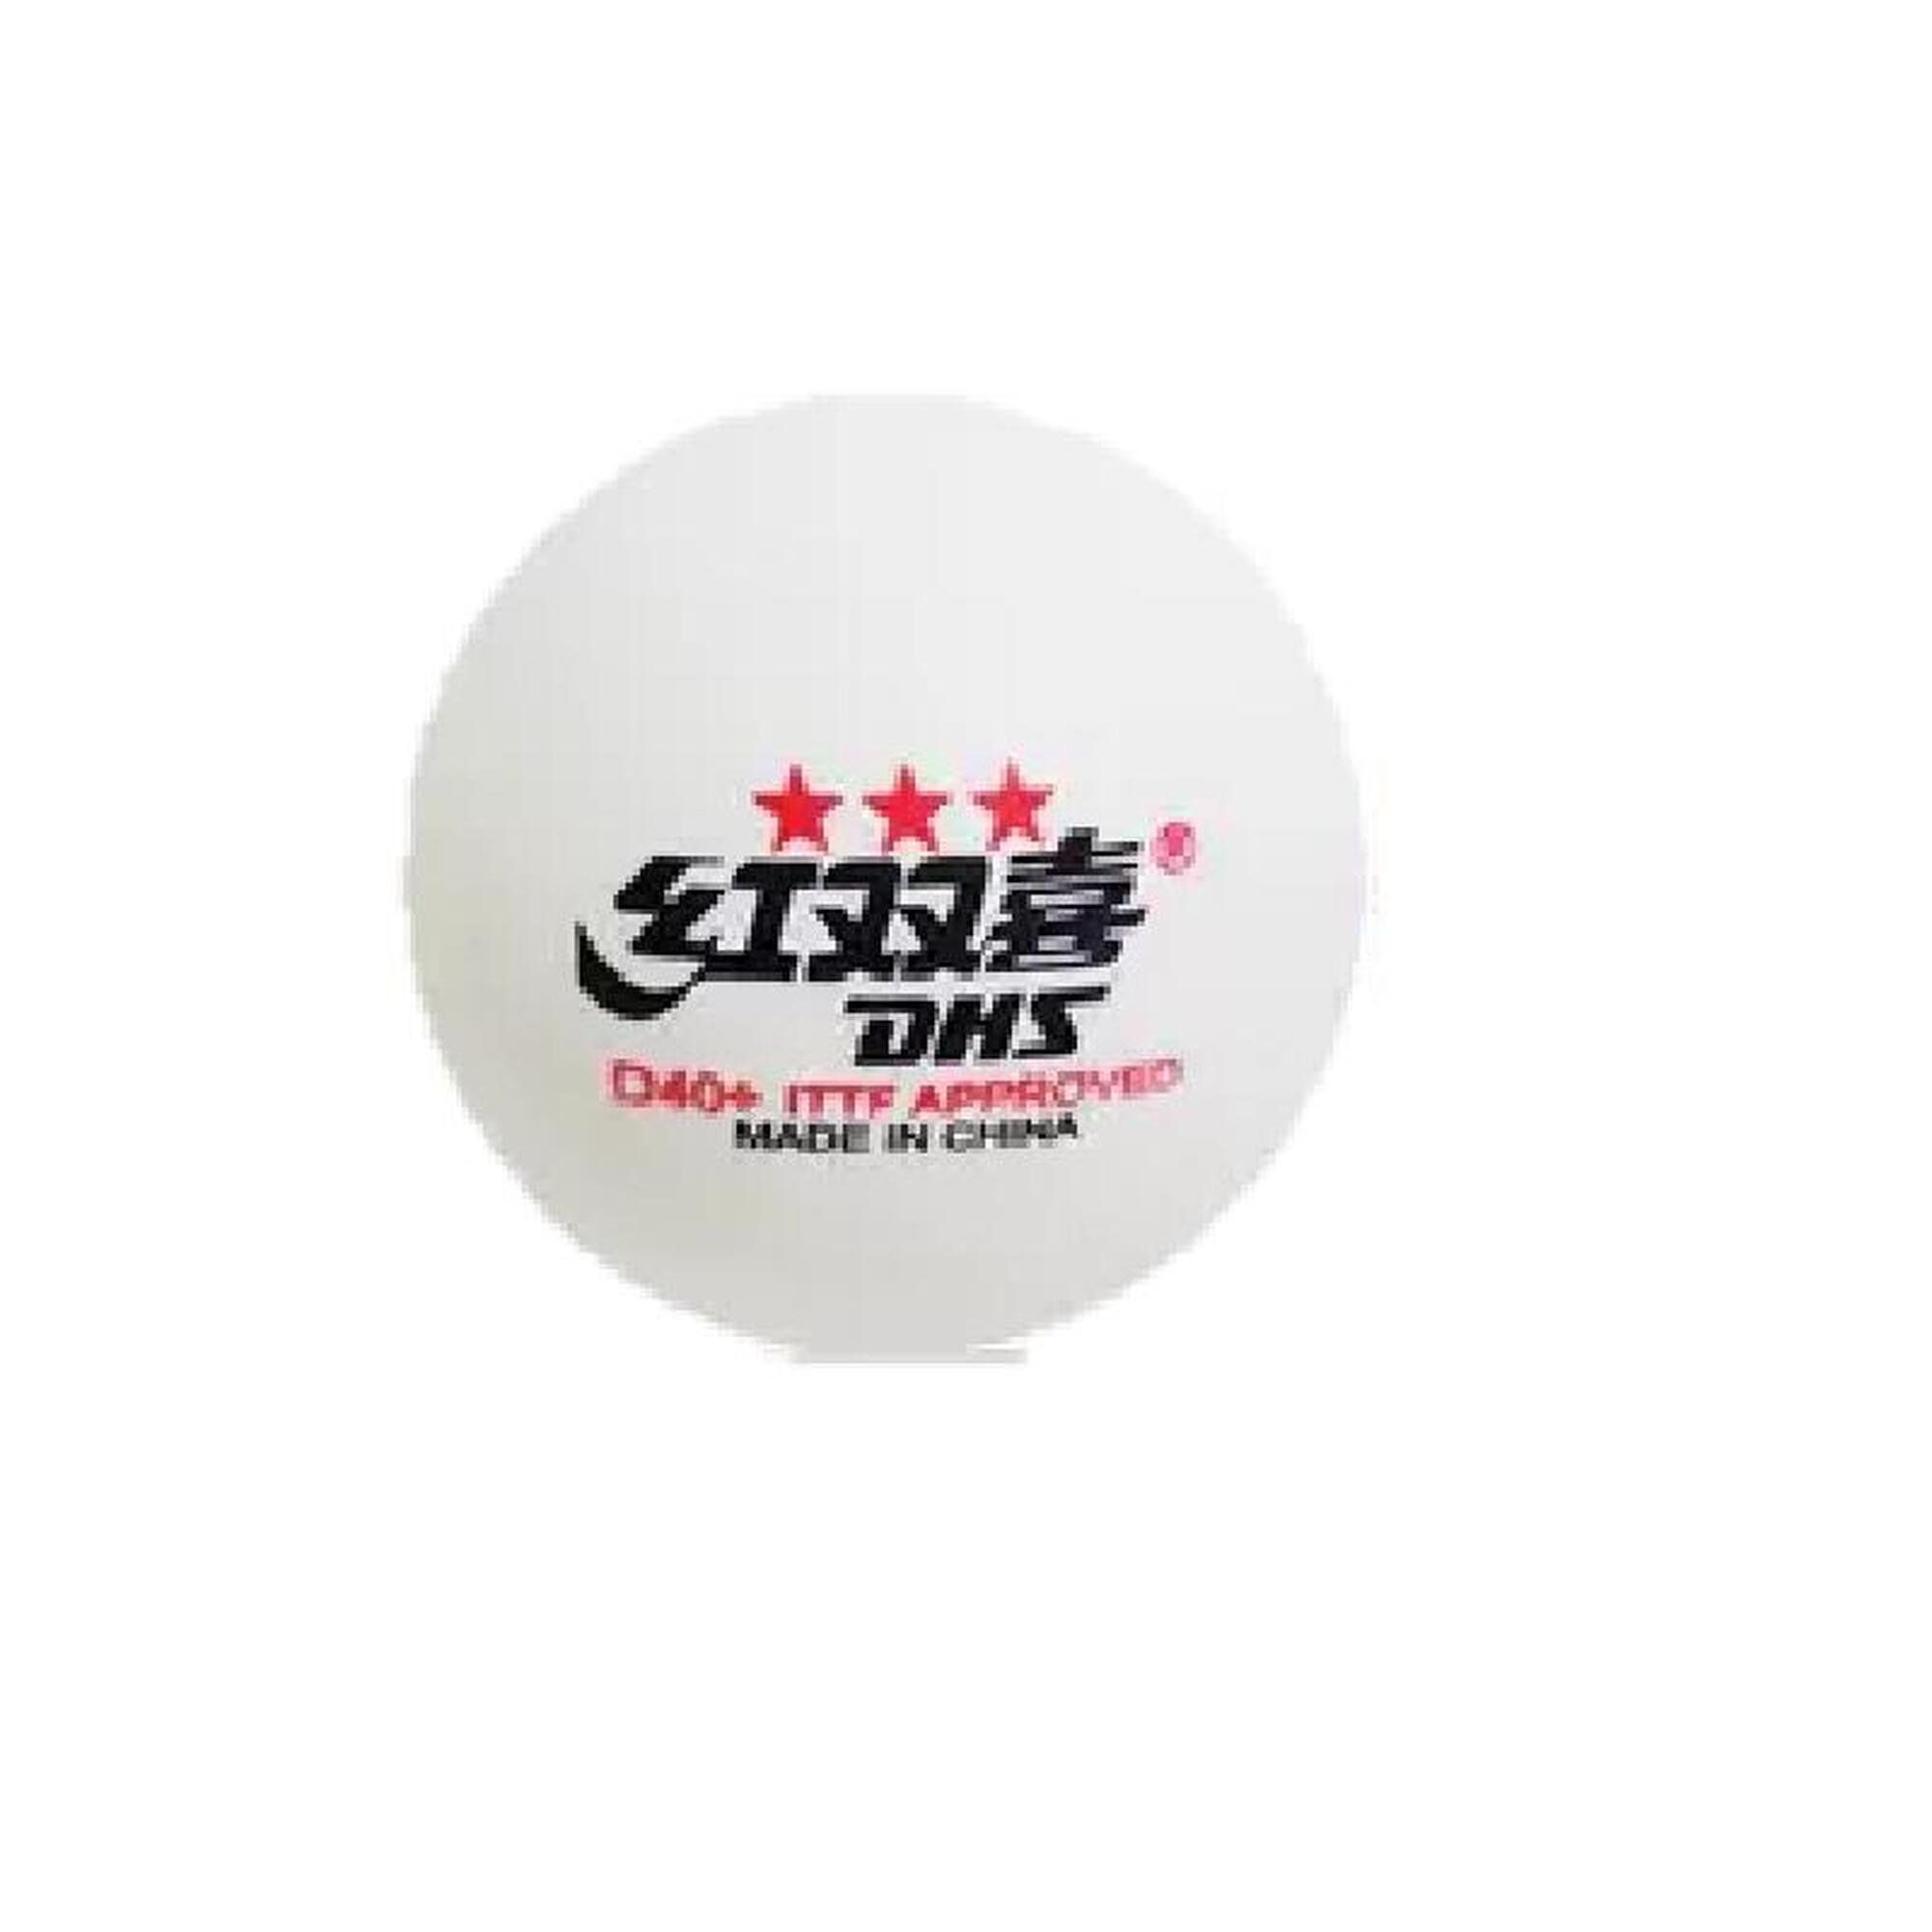 Cell-Free Dual D40+ Three Star Table Tennis Balls - WHITE